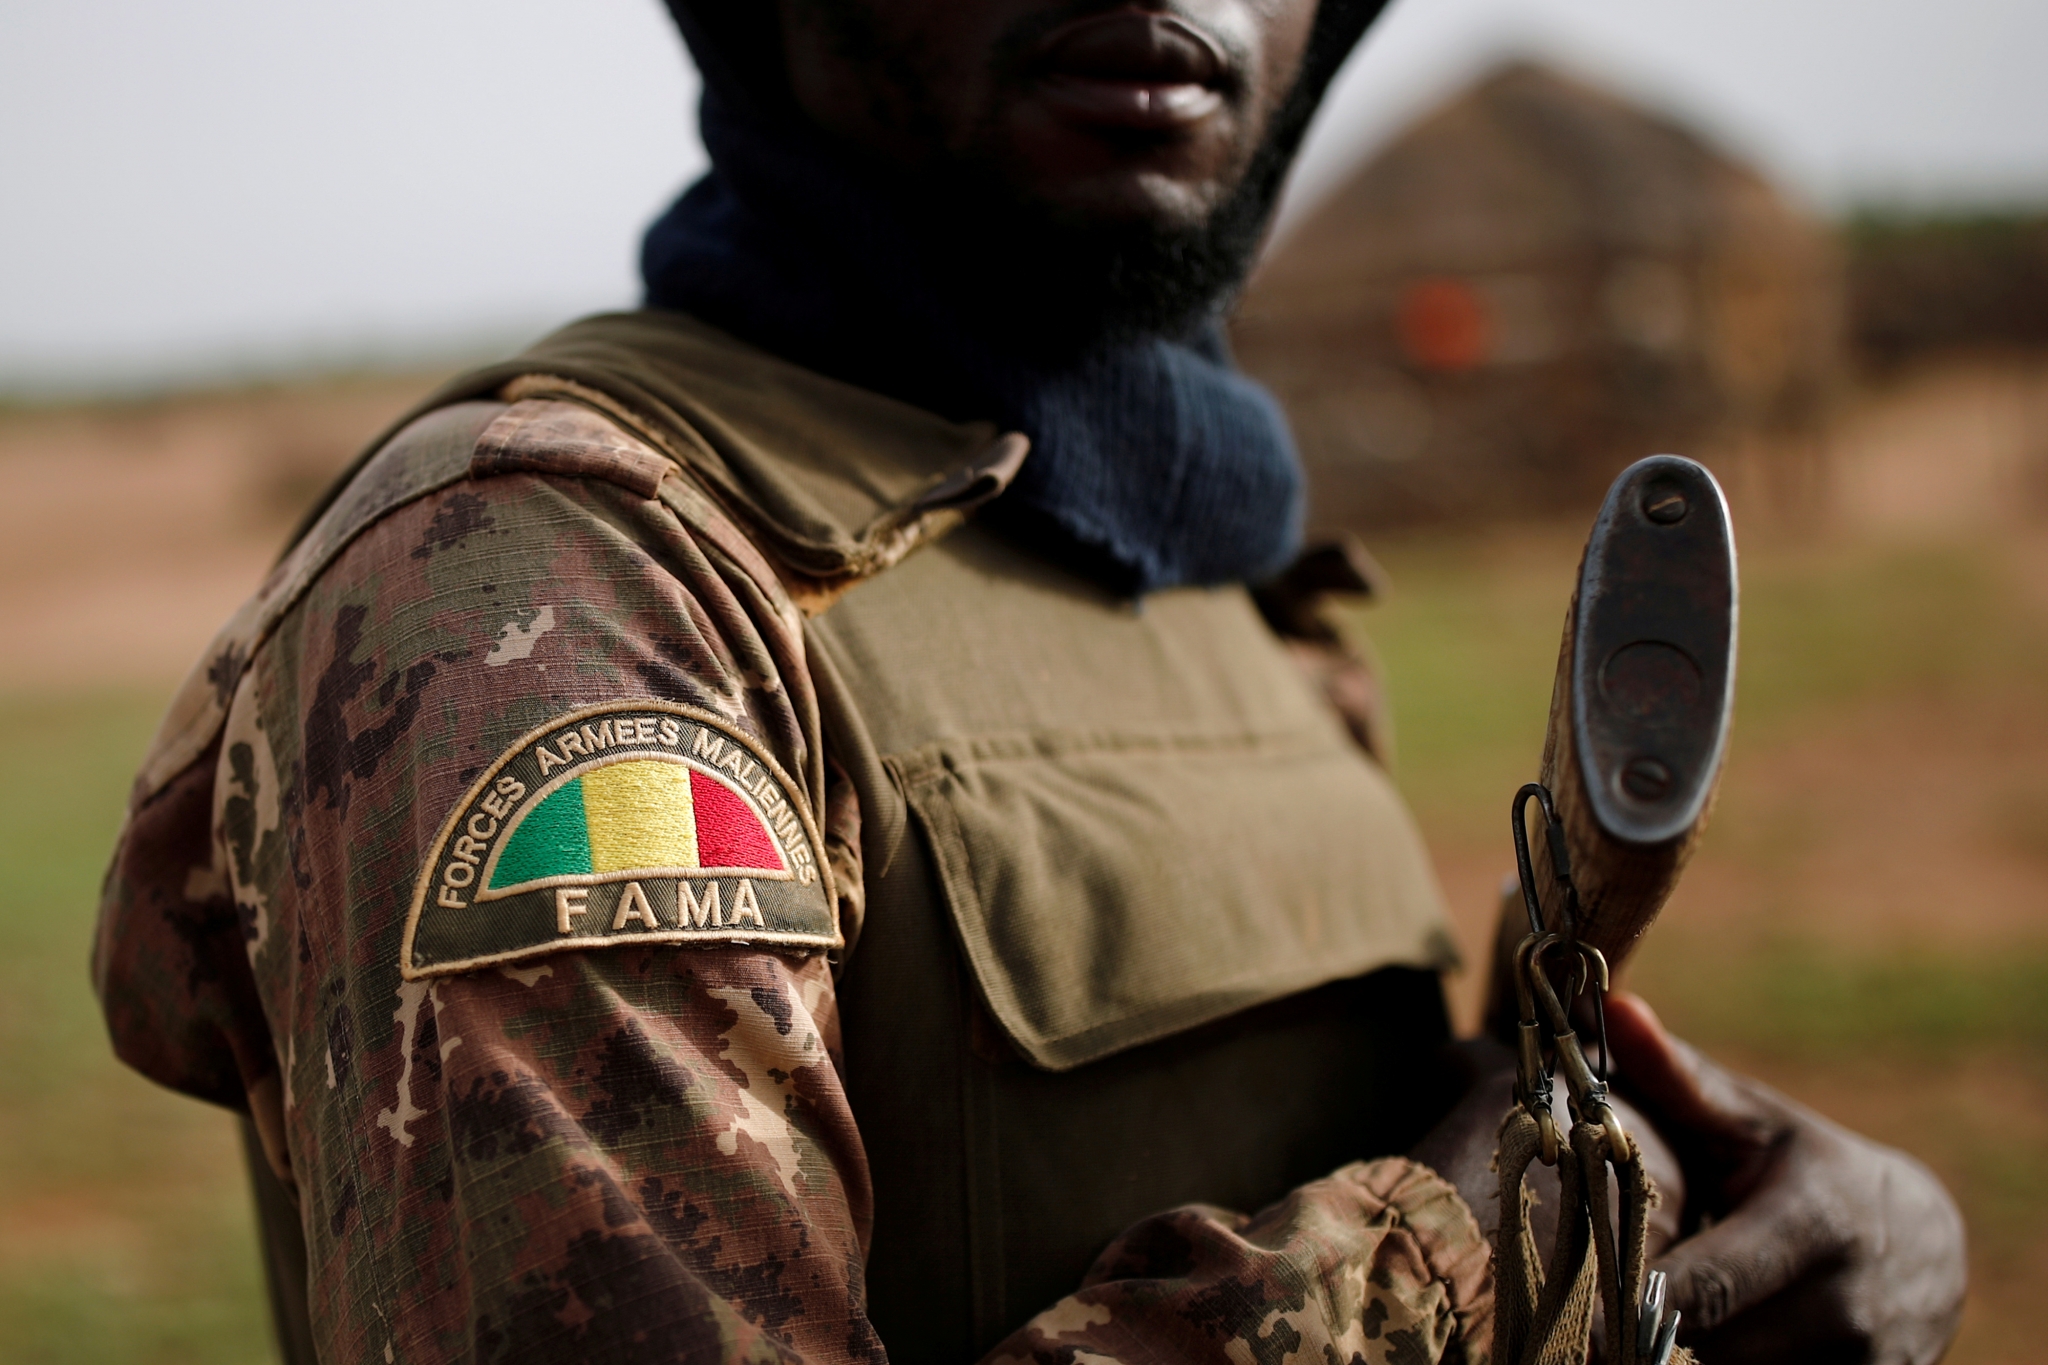 Urgent : Tentative de coup d’Etat au Mali